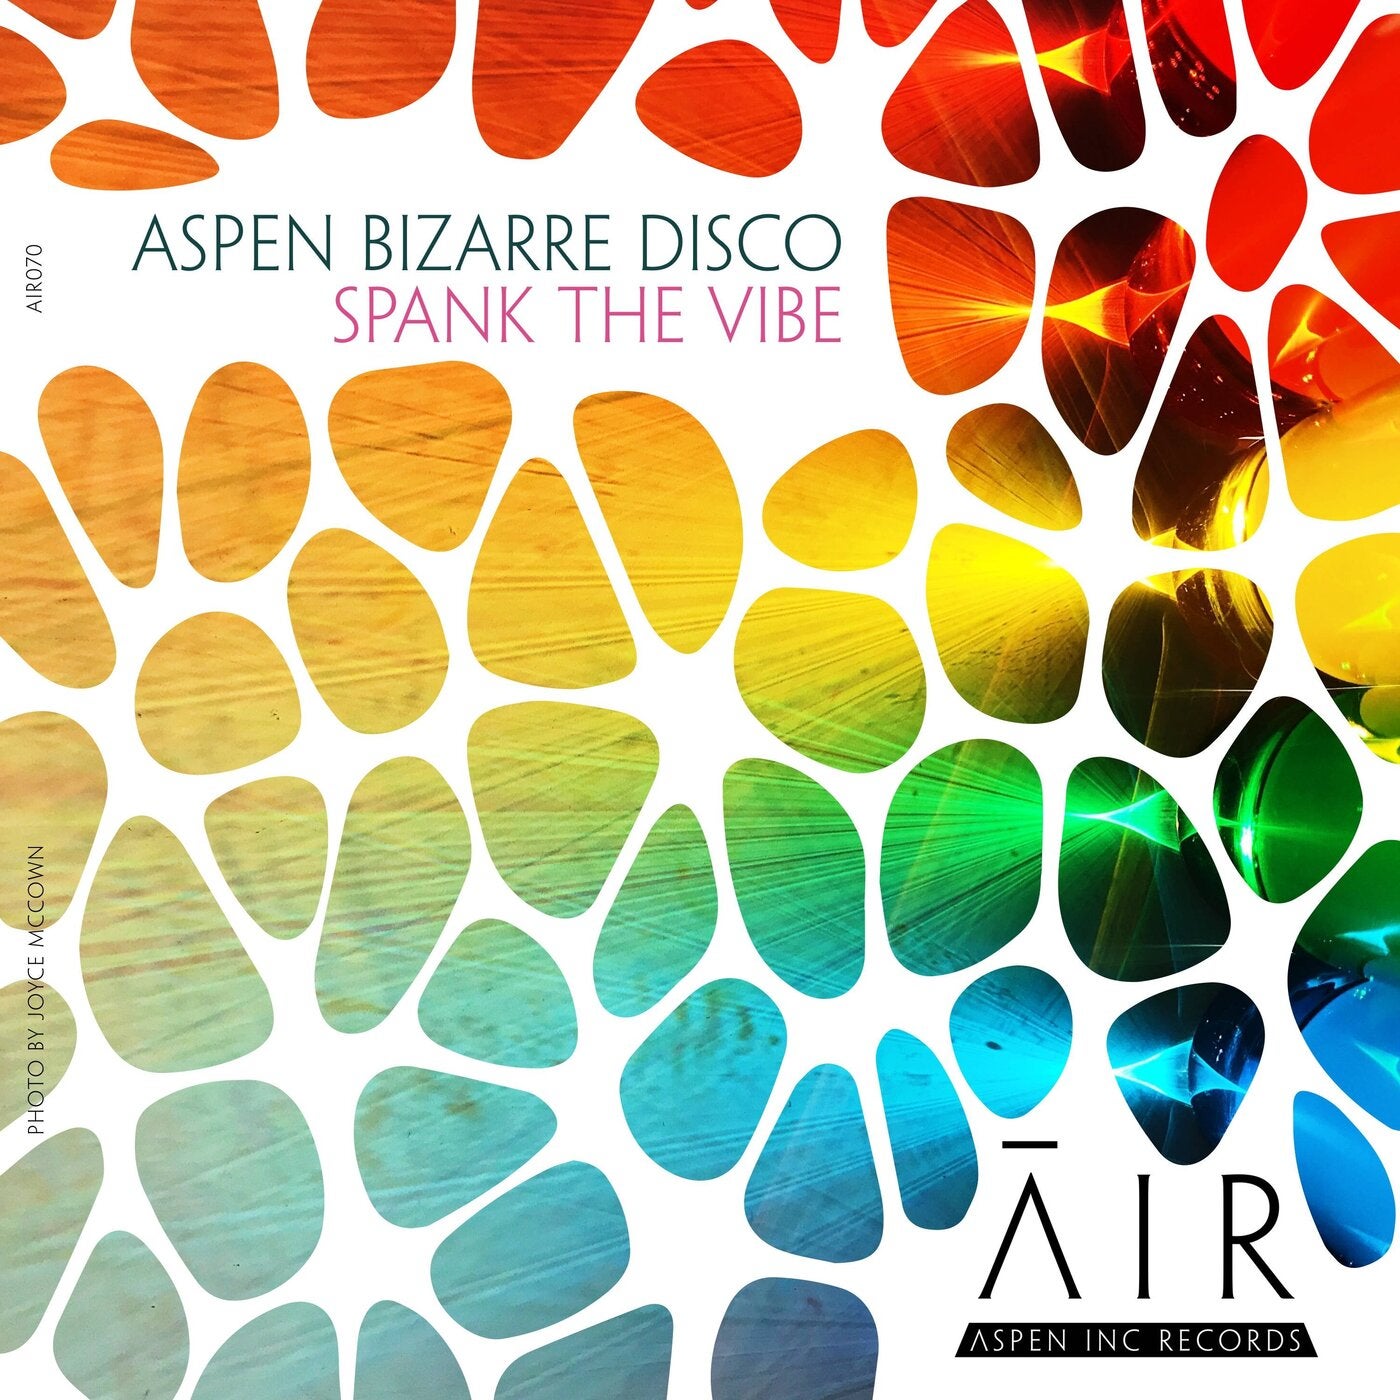 Cover - aspen bizarre disco - Spank The Vibe (Original Mix)